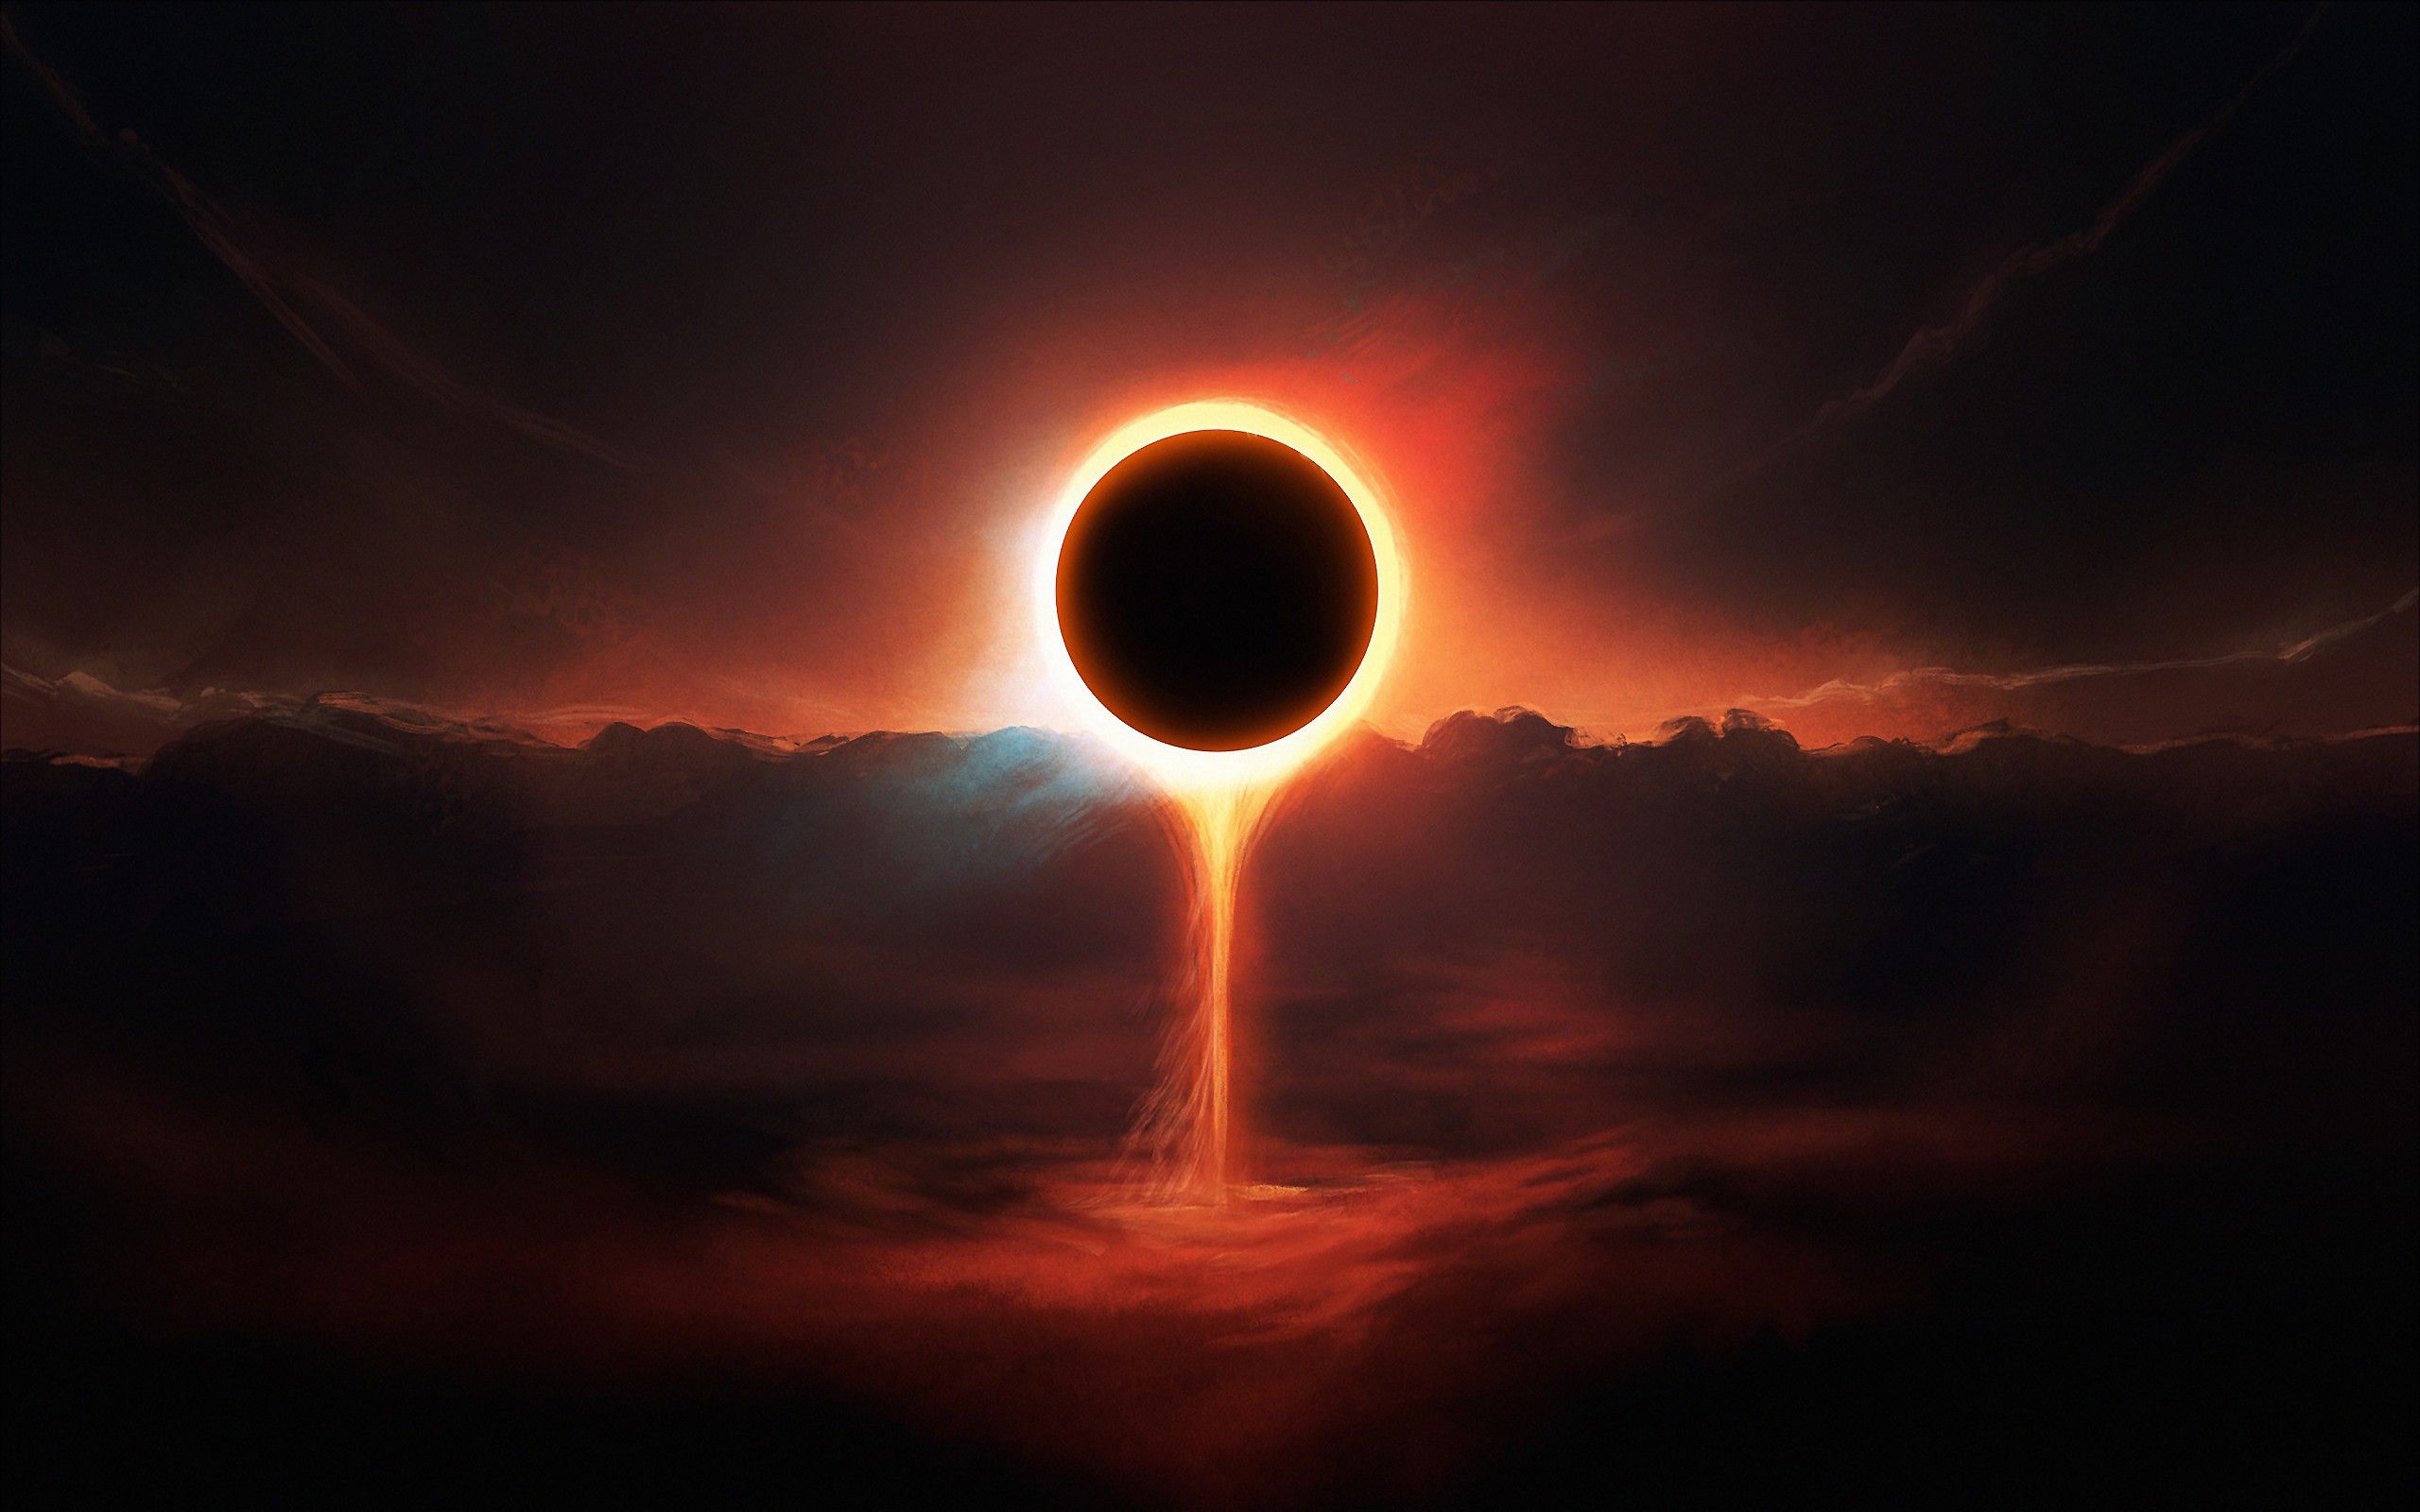 HD Wallpaper Solar Eclipse